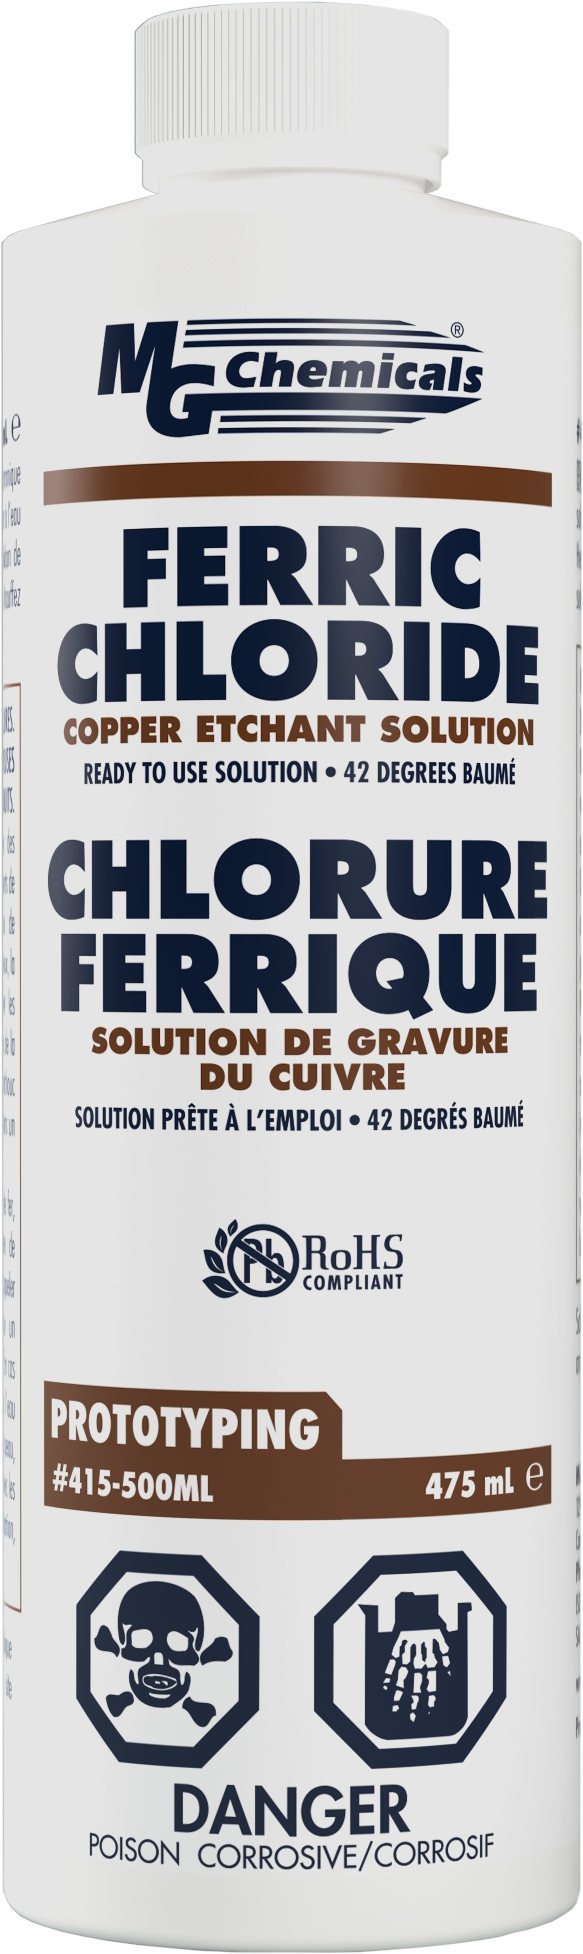 FERRIC CHLORIDE SOLUTION 500 ml, 415-500ML